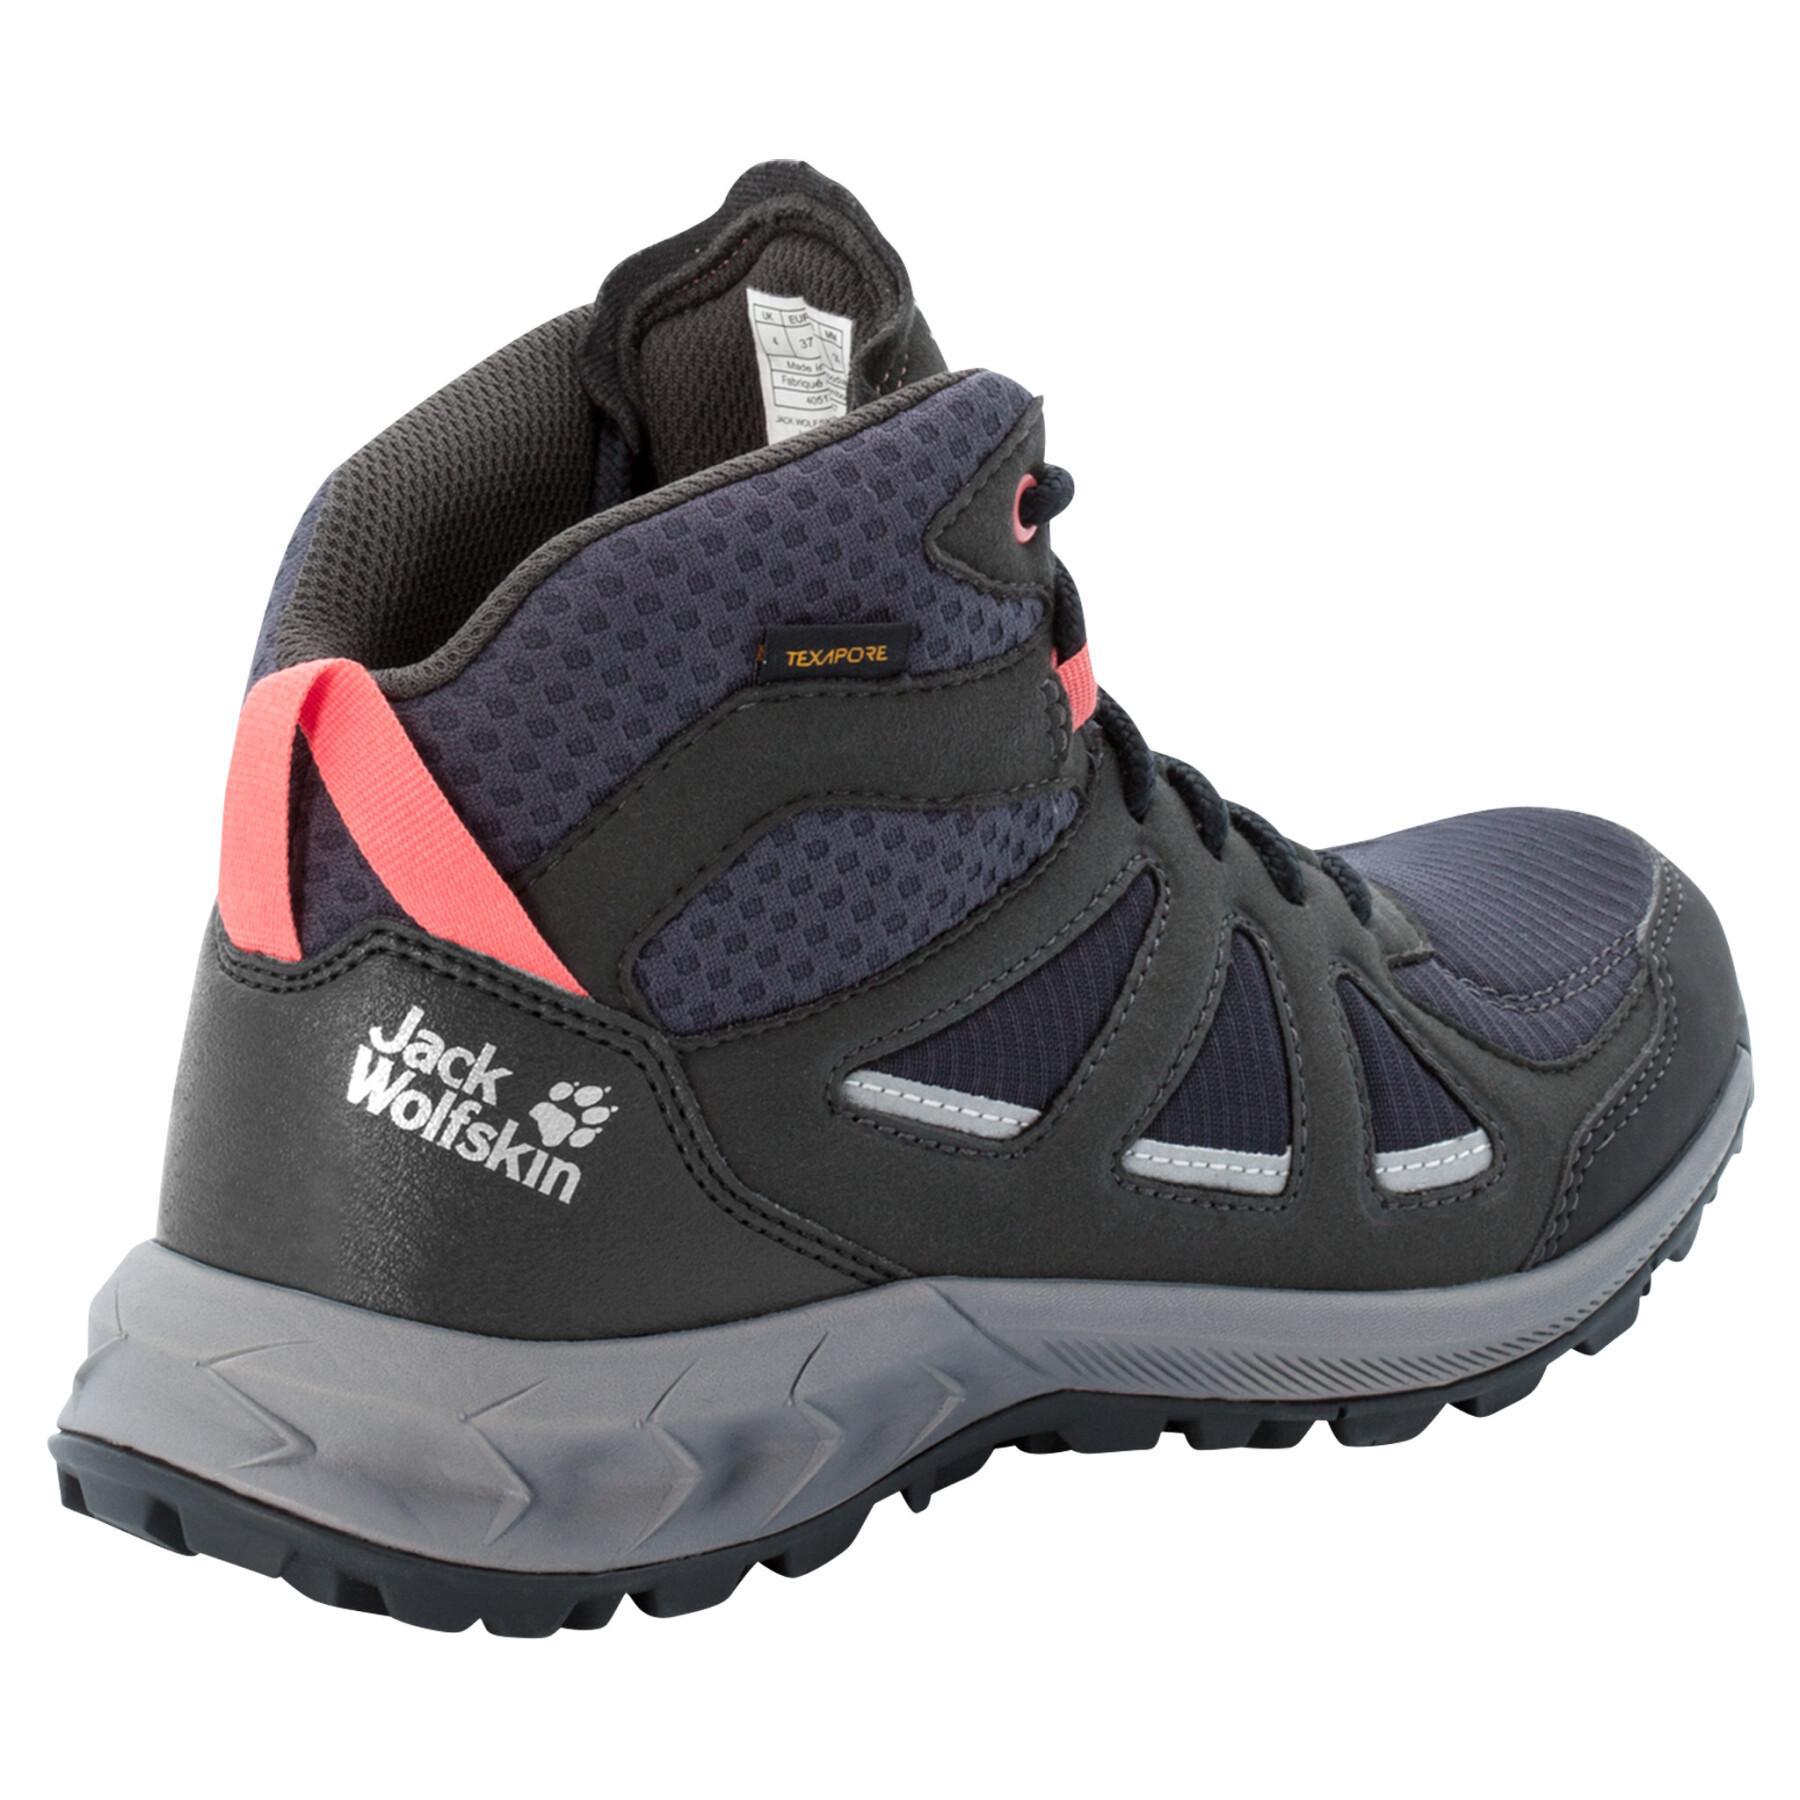 Women's hiking shoes Jack Wolfskin Woodland 2 Texaporeid Mid